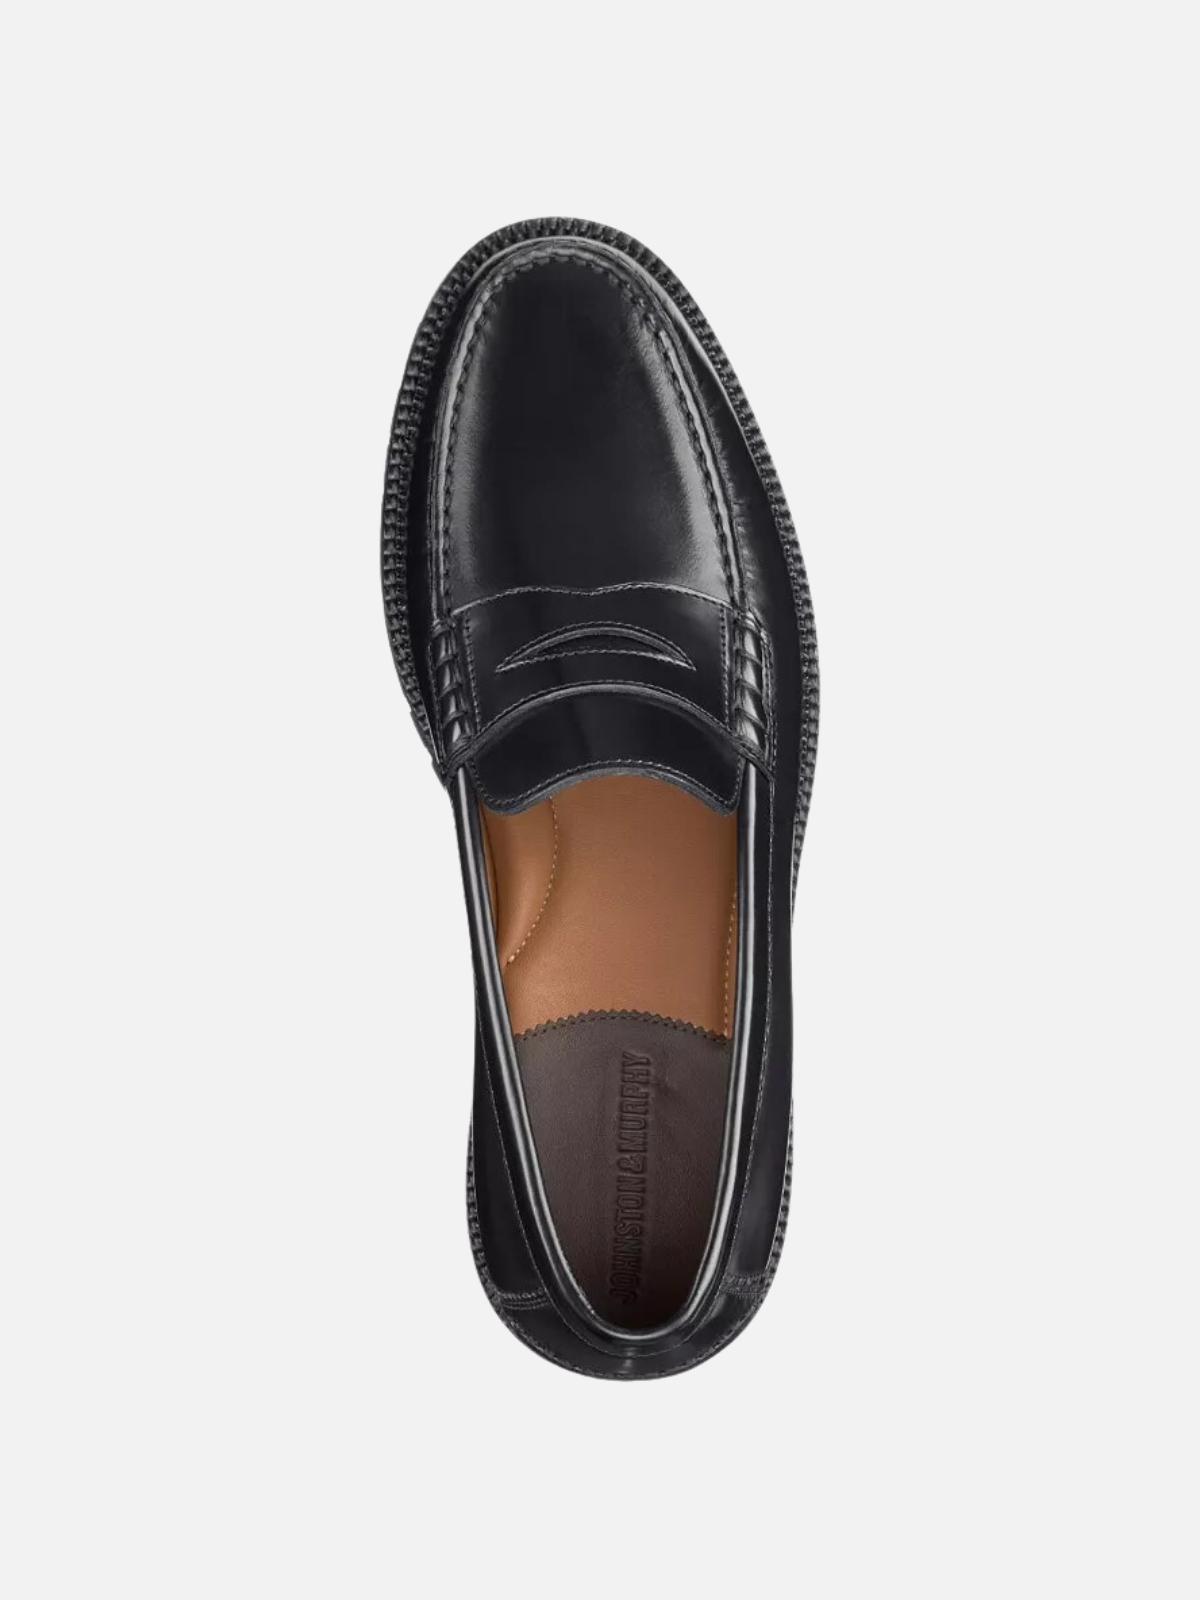 johnston & murphy donnell penny loafer black shine leather lug sole dress shoe kempt athens ga georgia men's clothing store